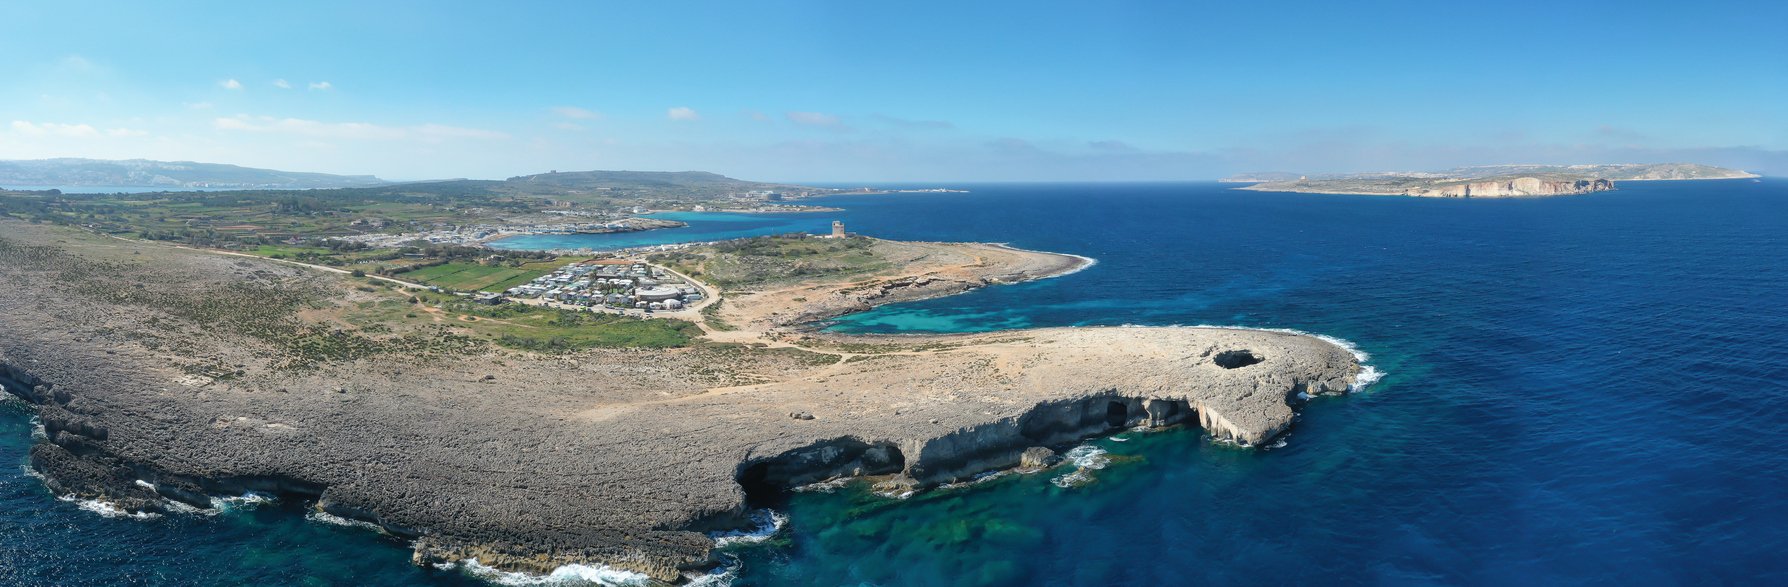 Coral Lagoon in Mellieha of Malta island. Aerial view